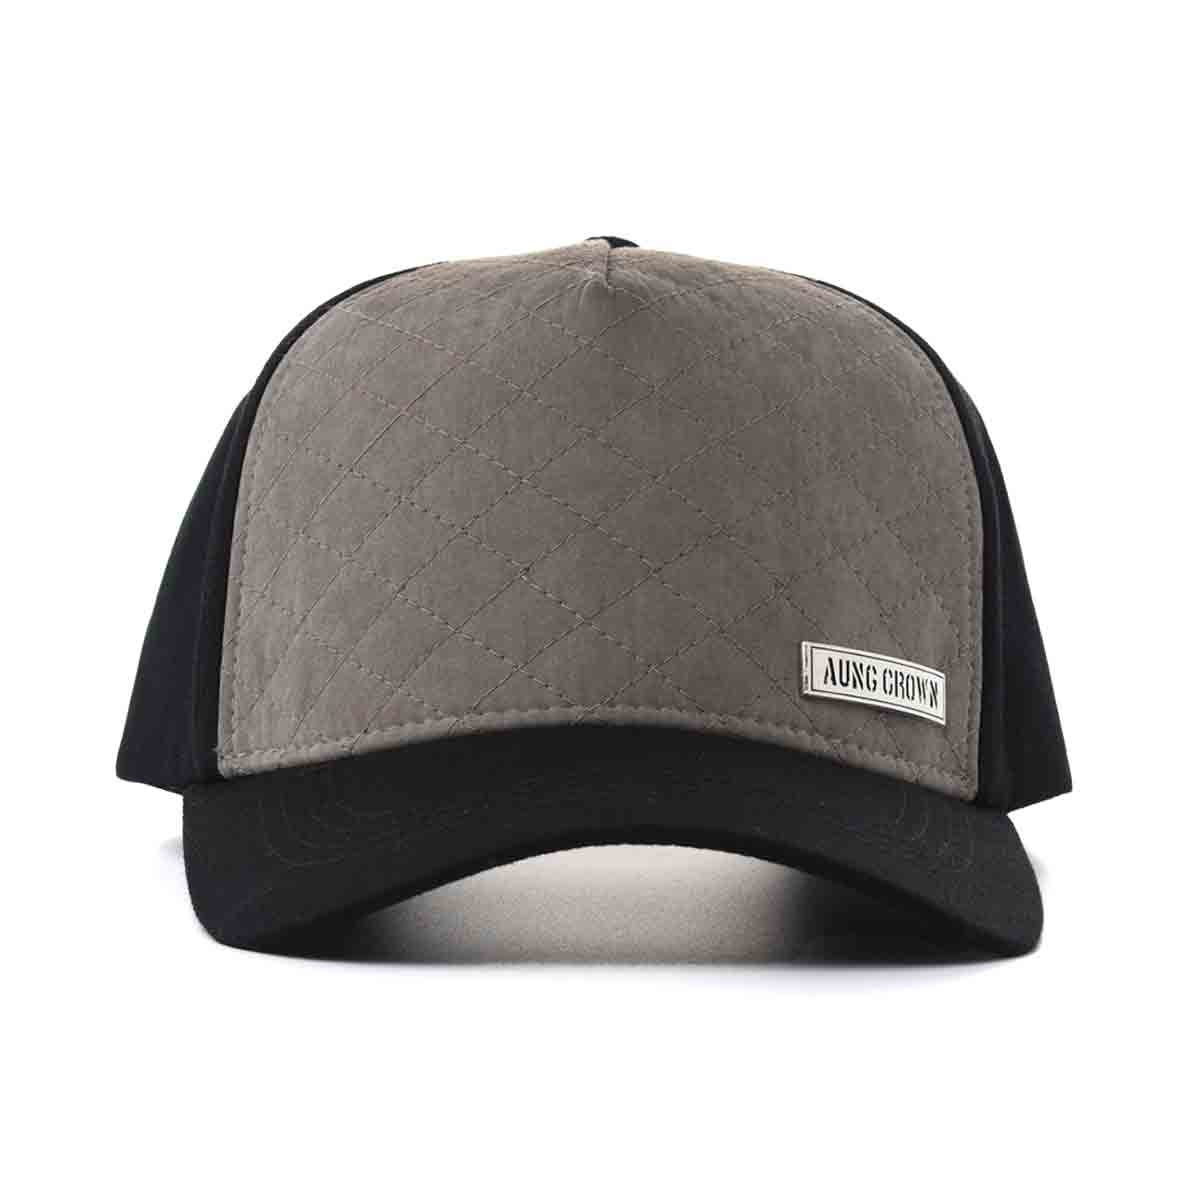 gray-black-metal-baseball-cap-SFG-210429-6